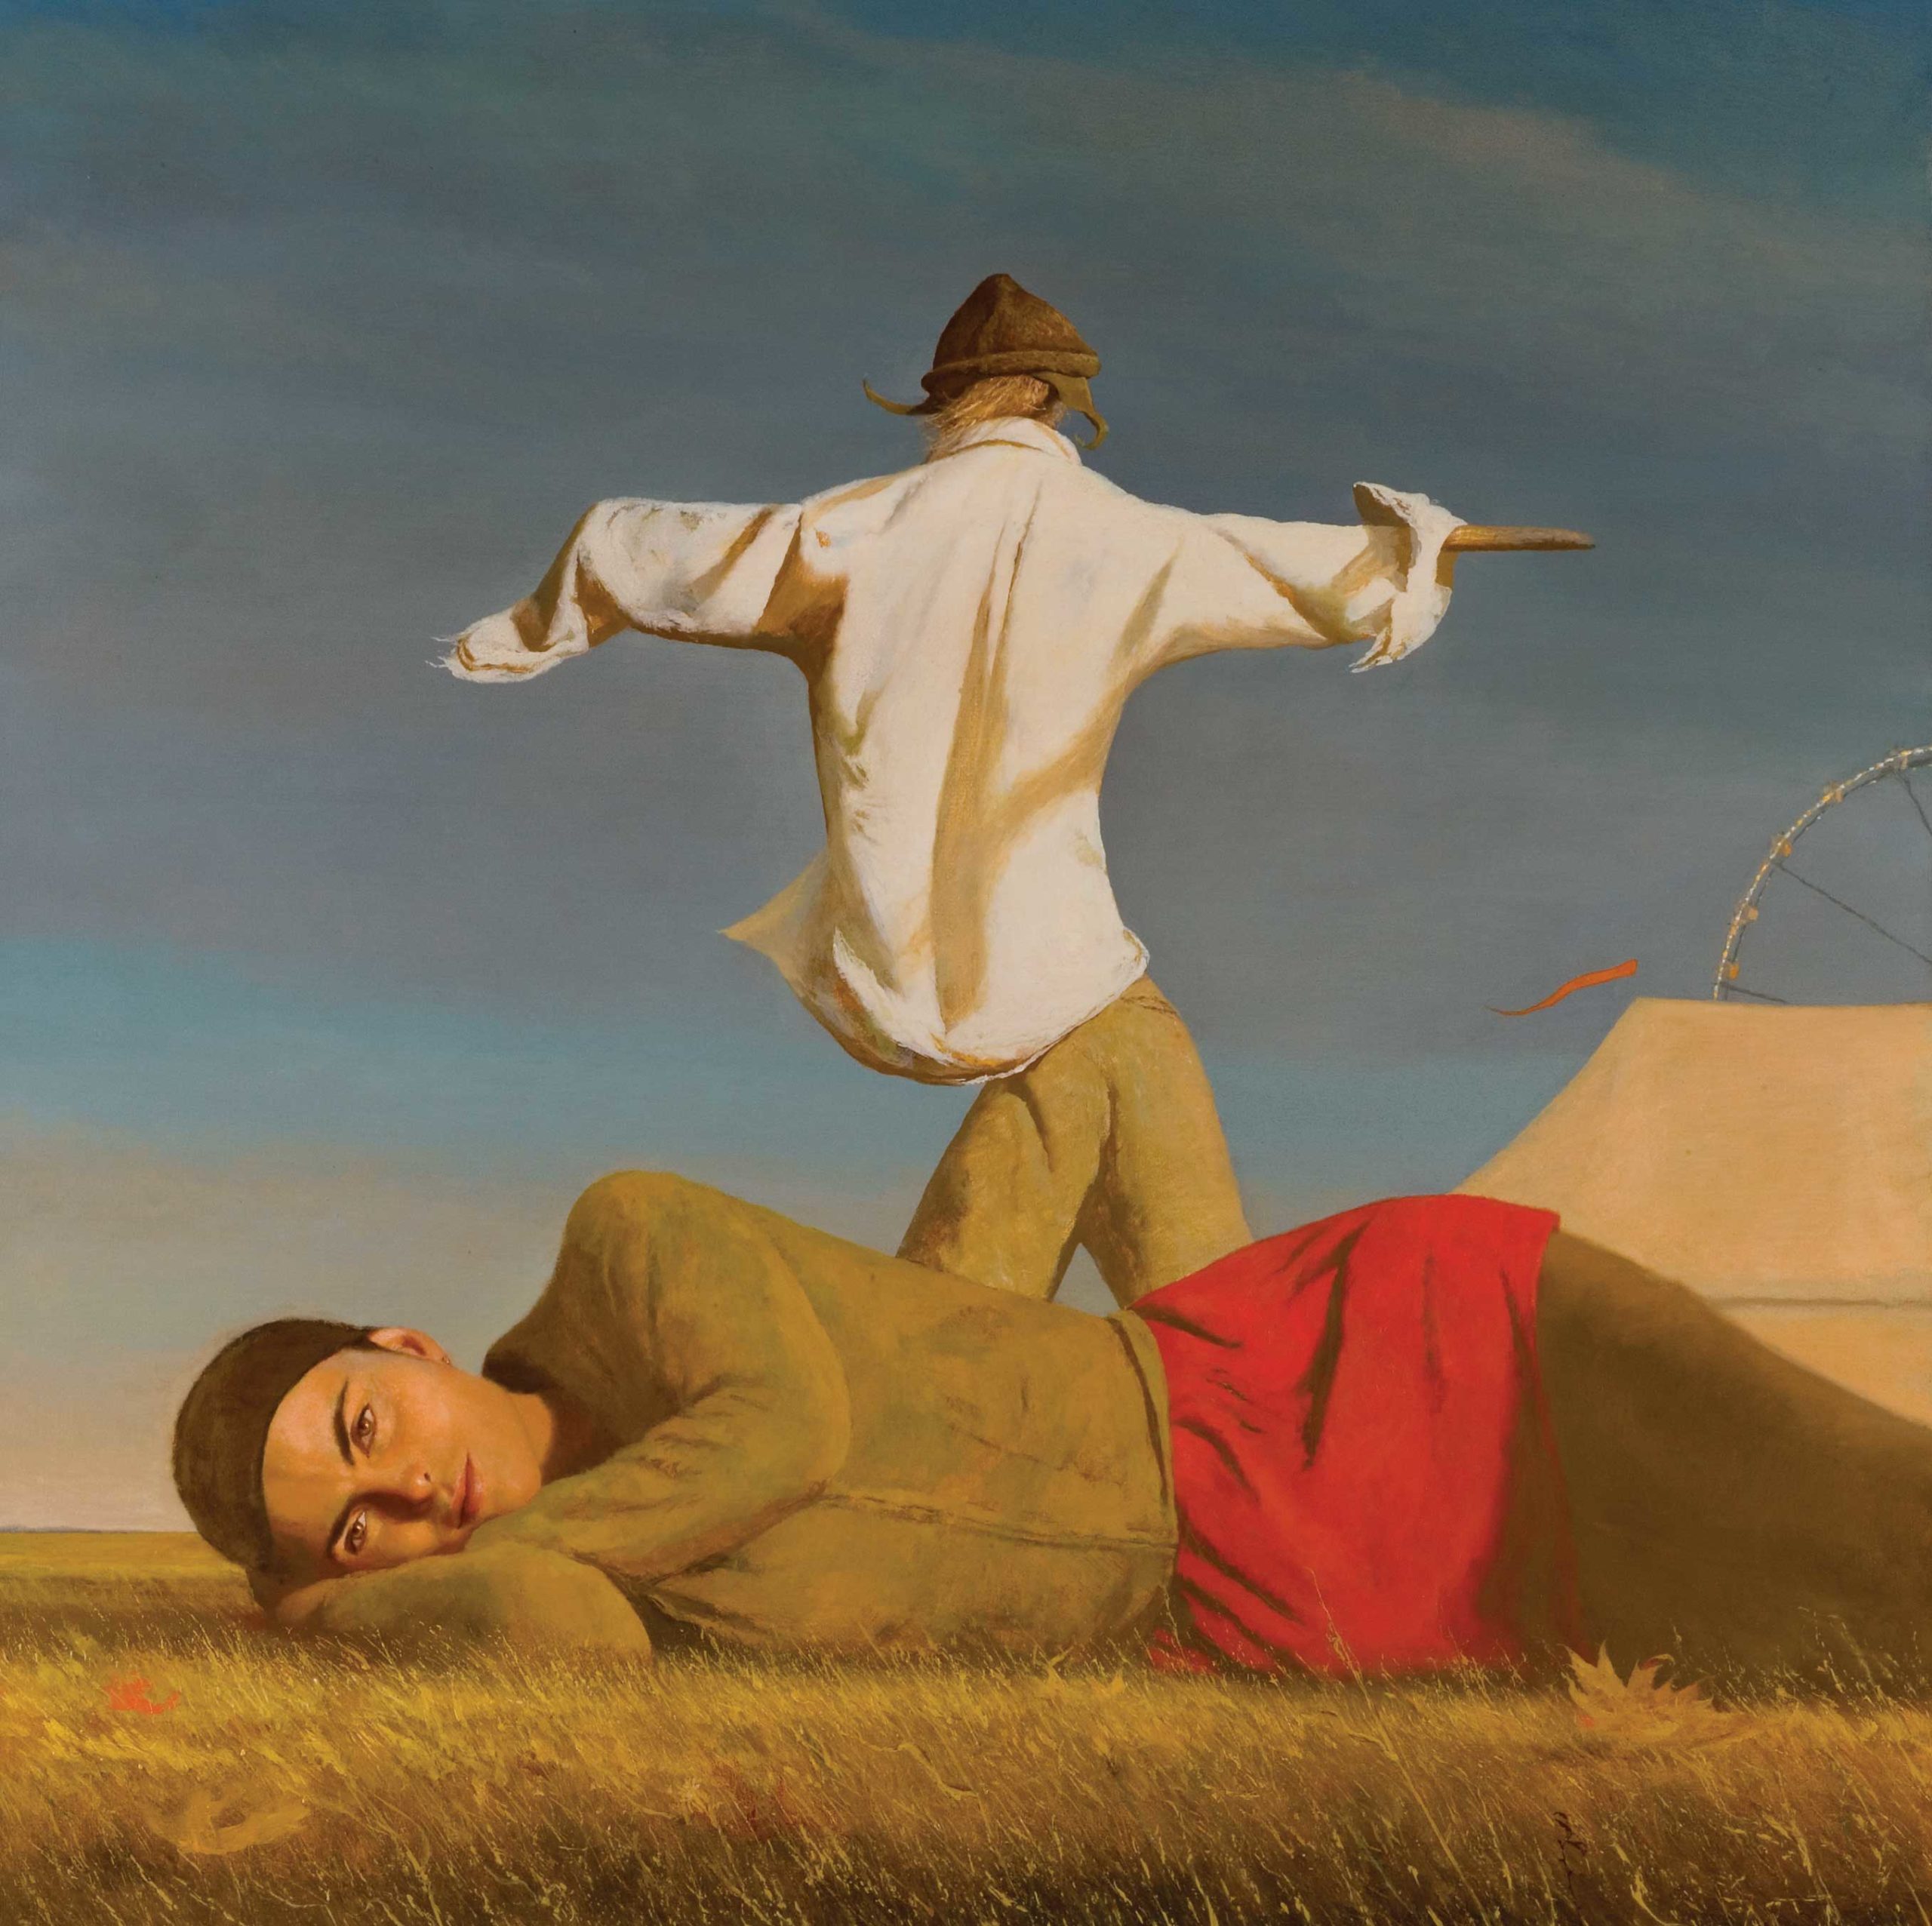 contemporary realism - Bo Bartlett, "The Cruel Fair," 2007, oil on linen, 48 x 48 in., private collection